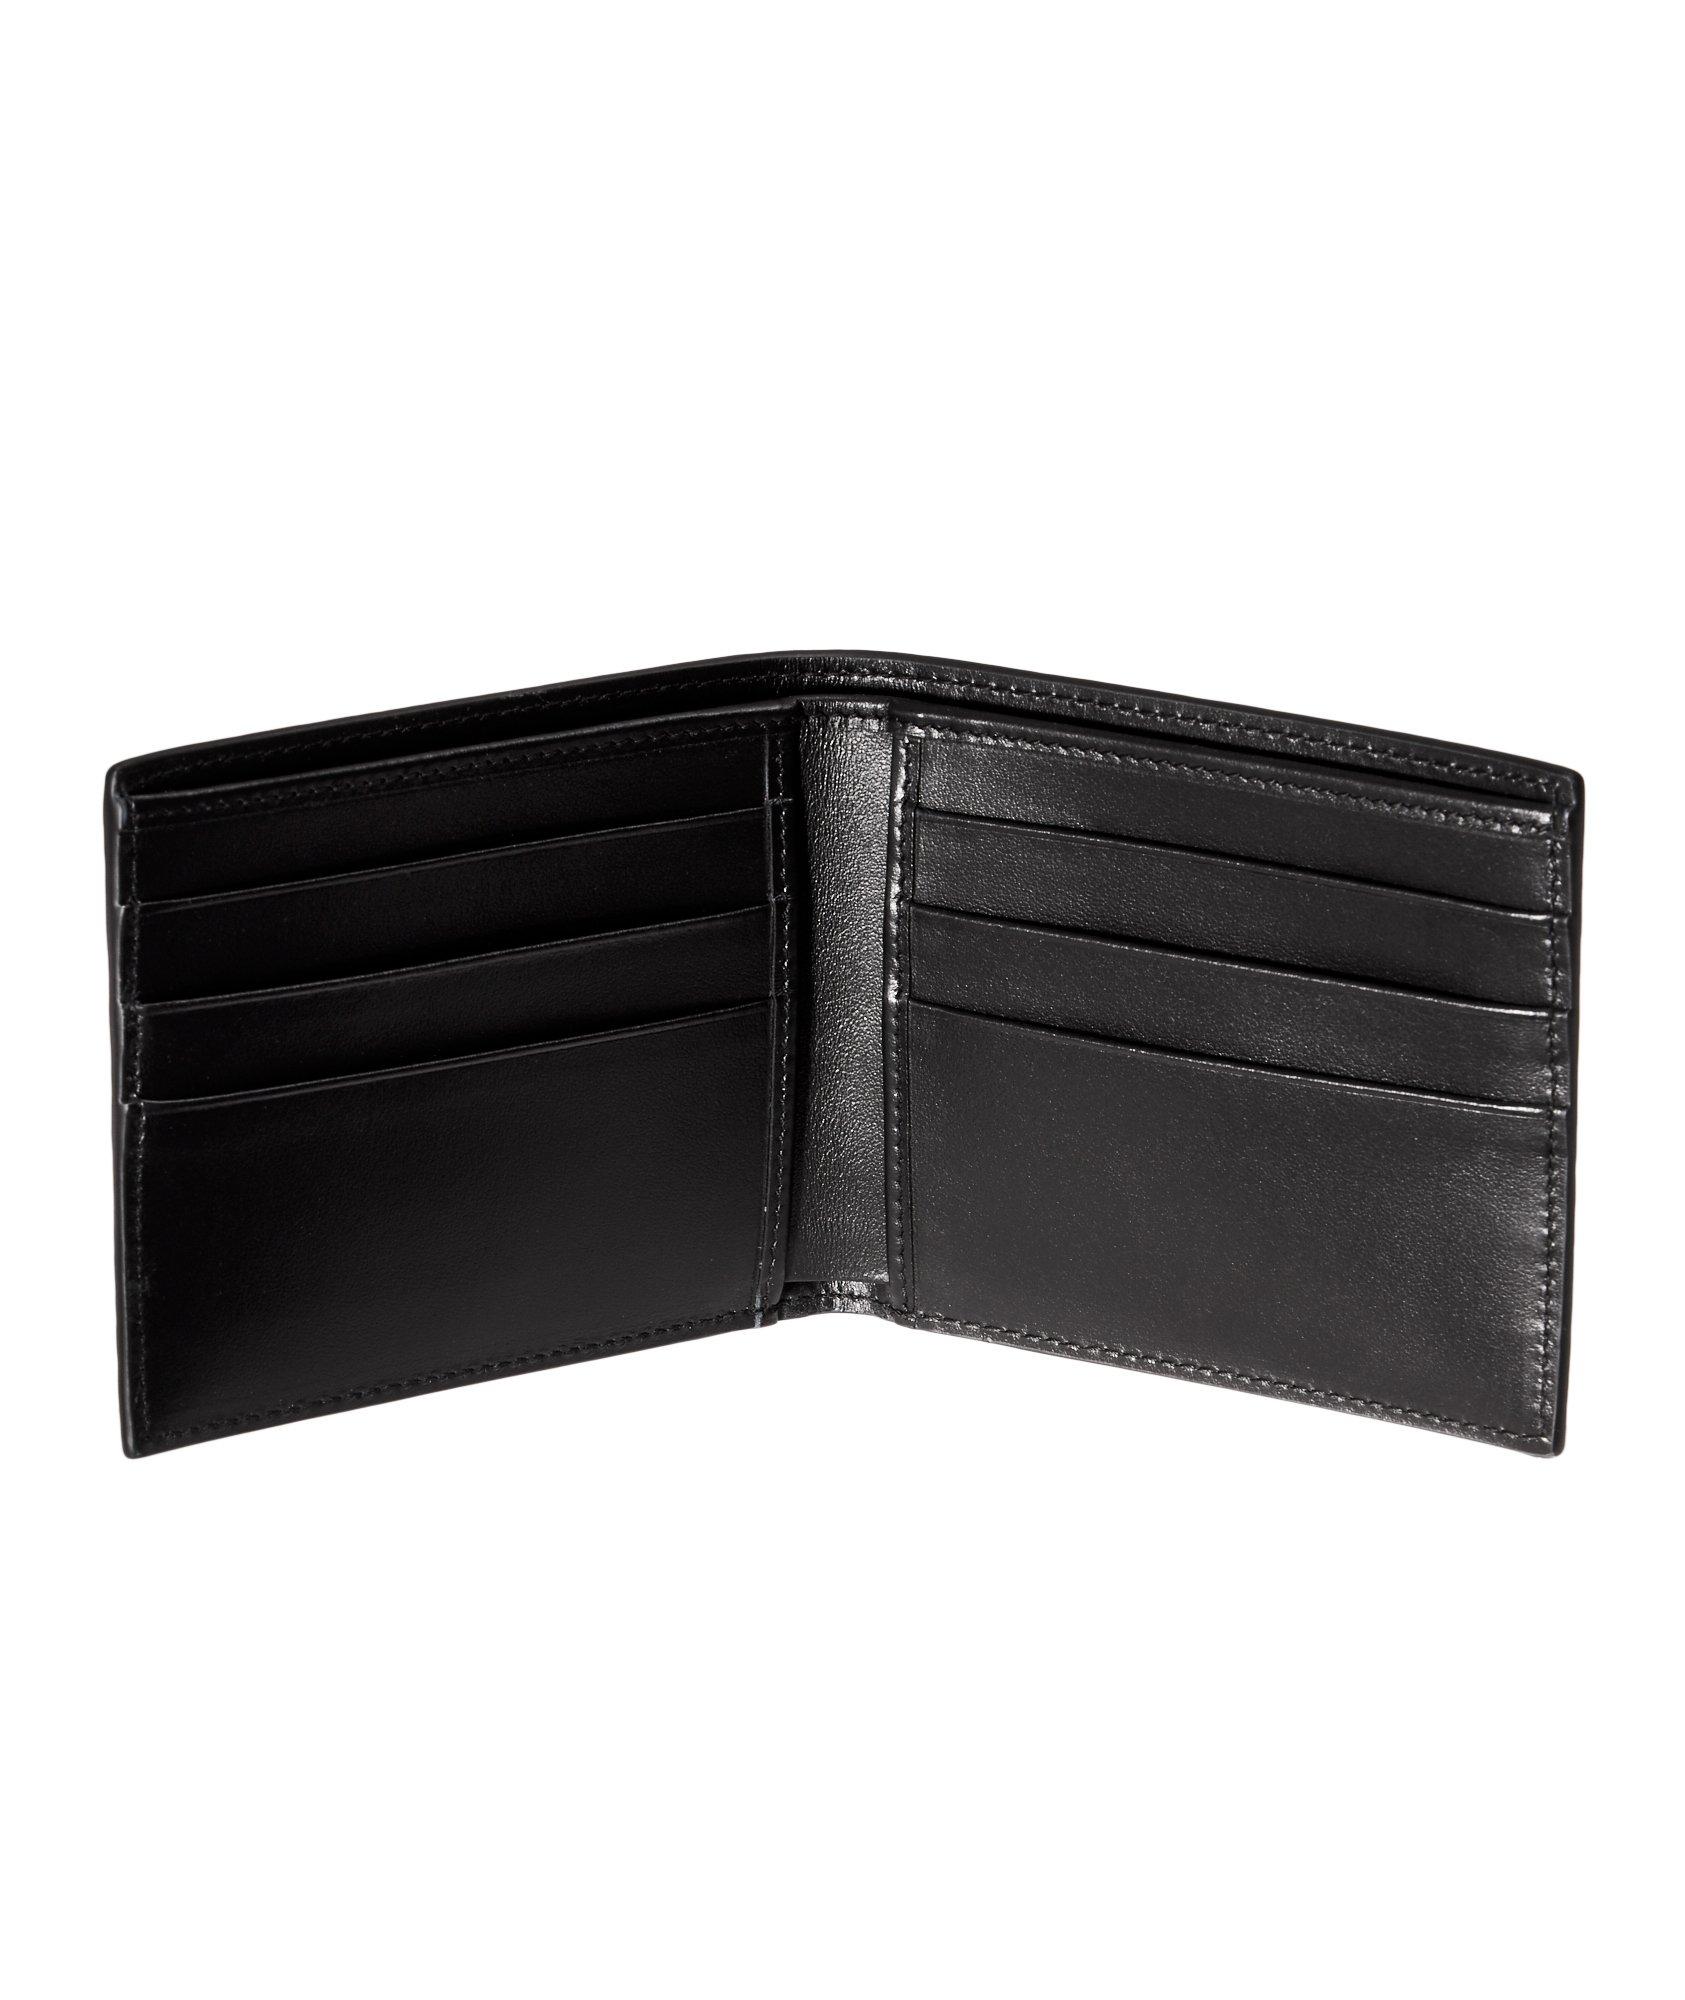 Leather Billfold Wallet image 1